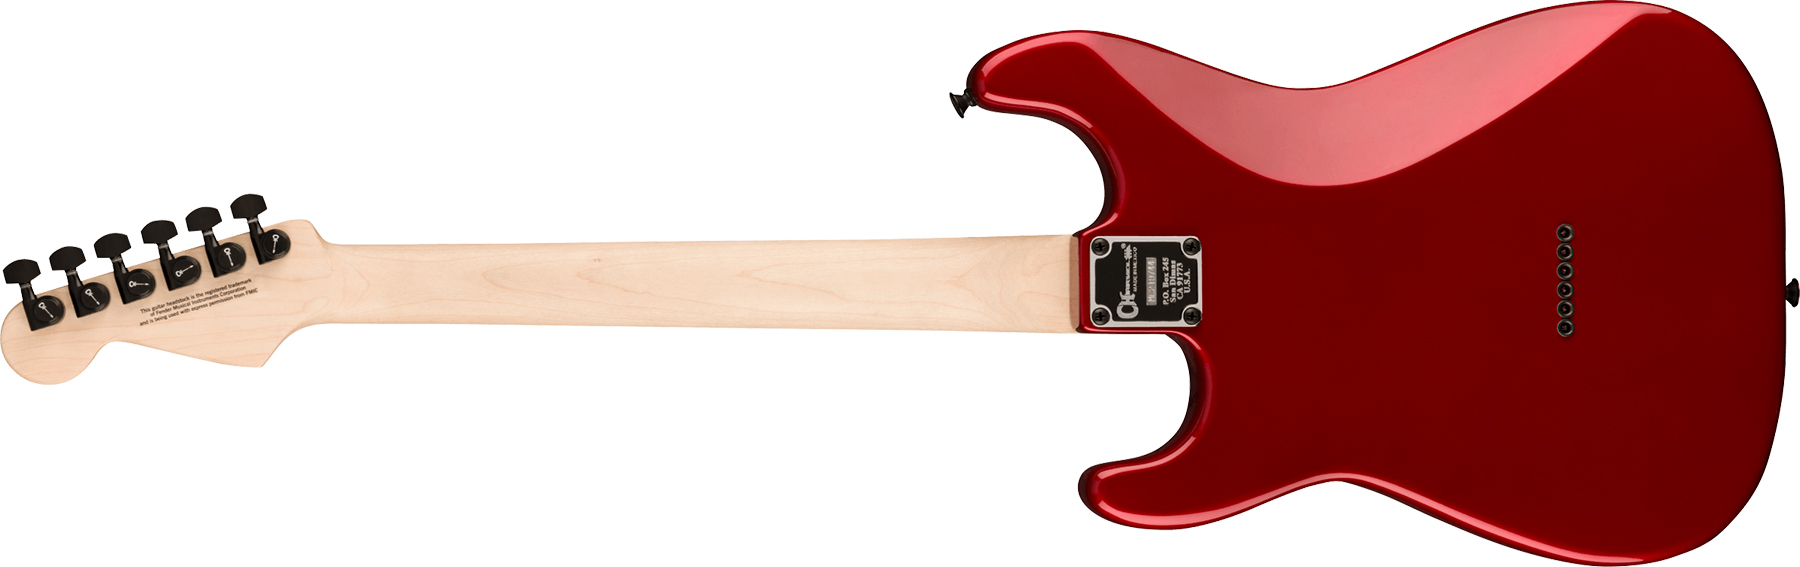 Charvel So-cal Style 1 Hh Ht E Pro-mod 2h Seymour Duncan Eb - Candy Apple Red - Guitarra eléctrica con forma de str. - Variation 1